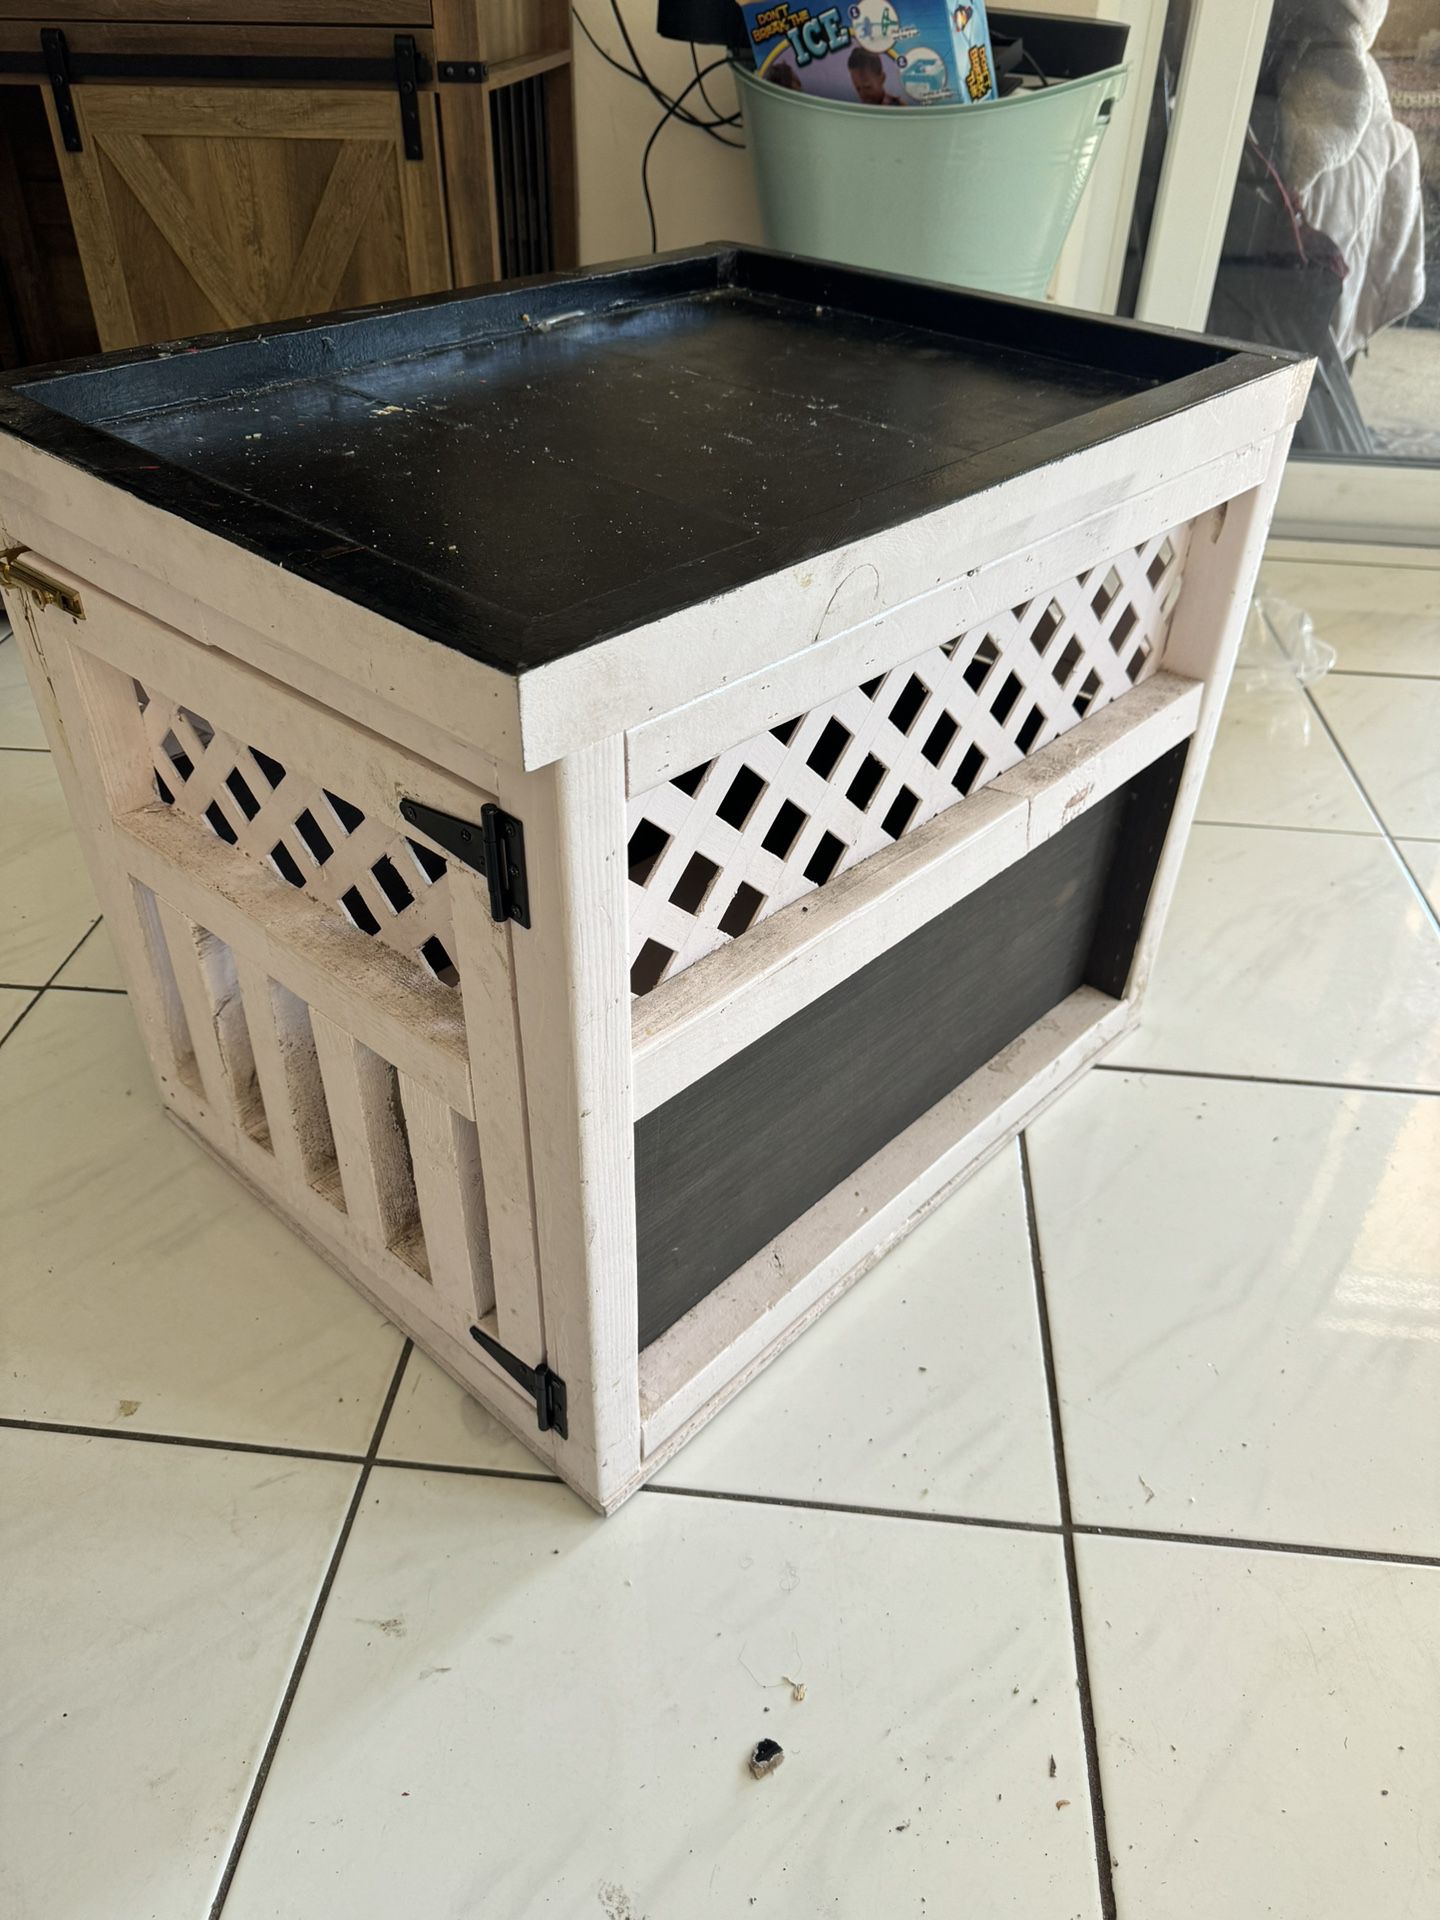 Dog Crate For Medium Dog